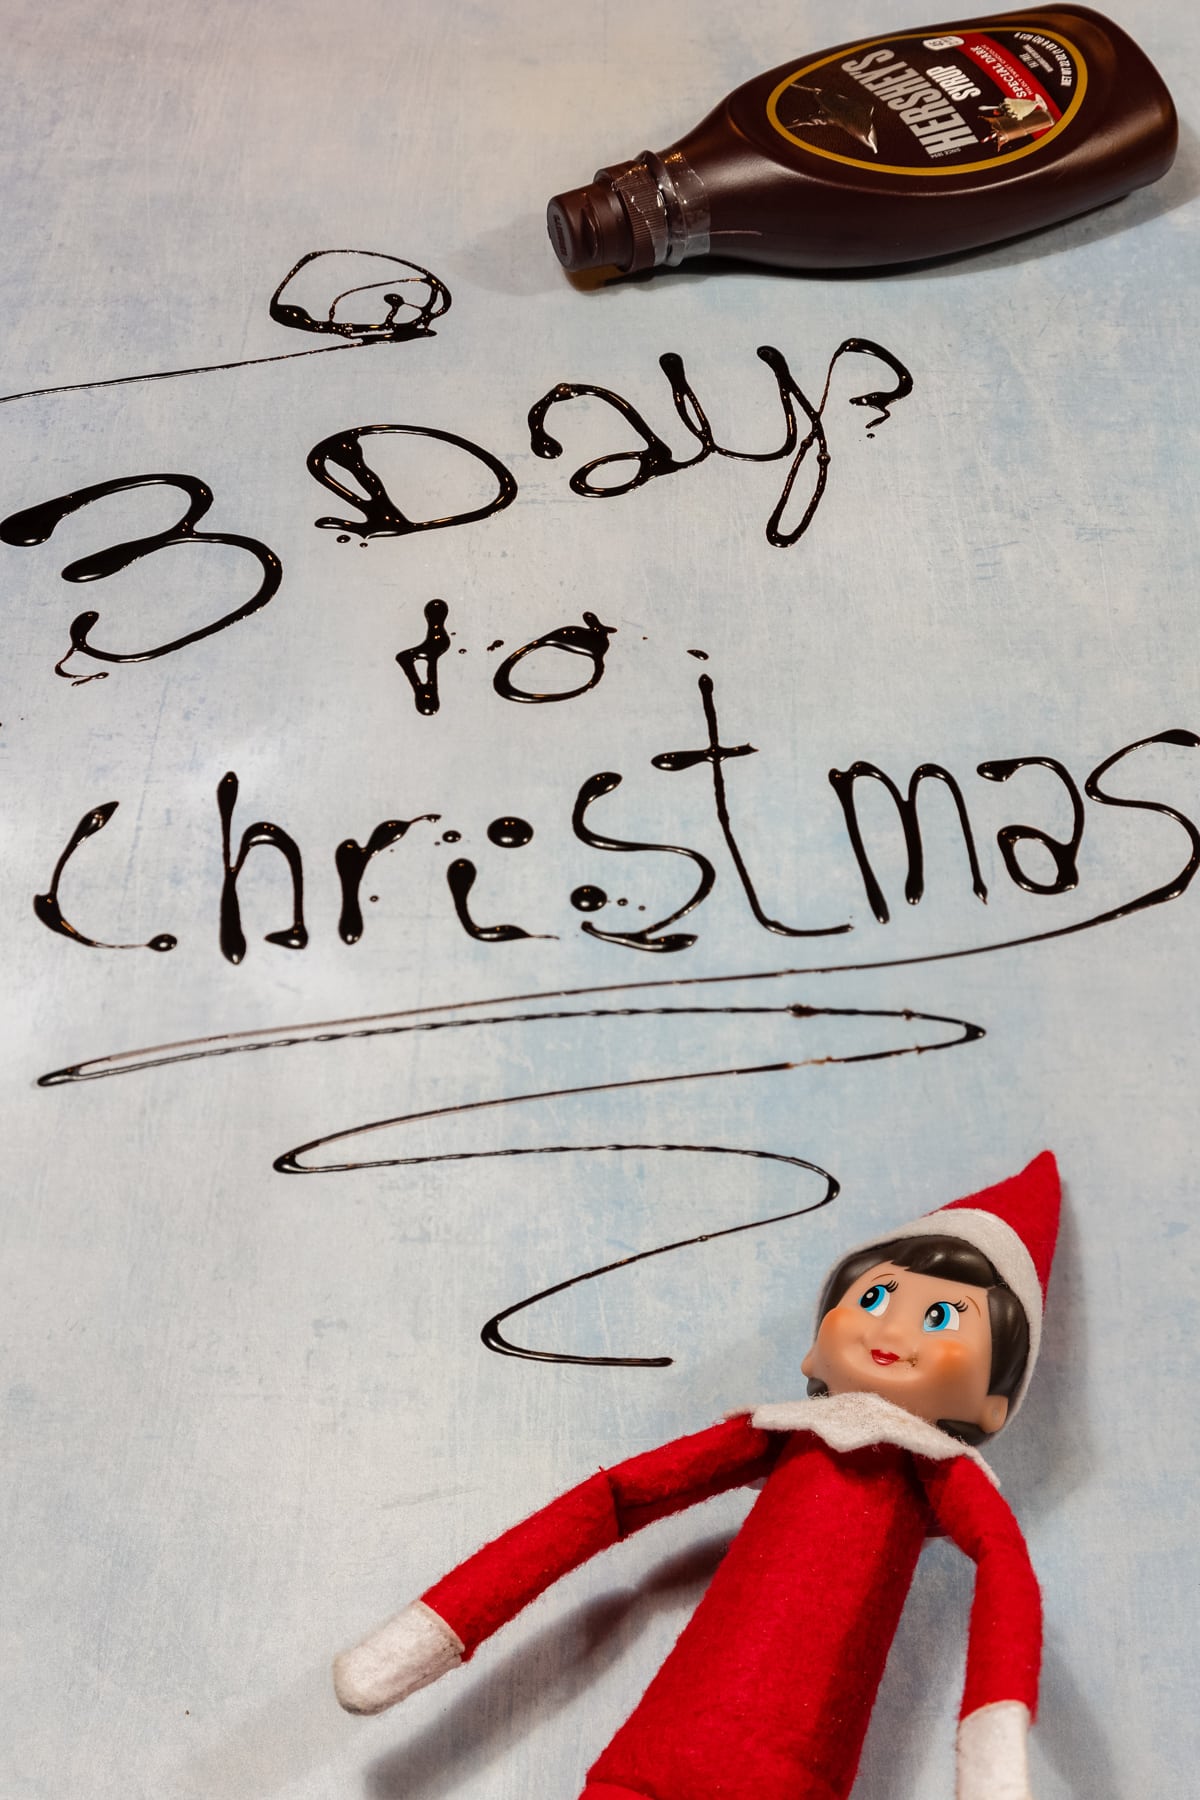 Elf on the shelf 3 days to christmas.